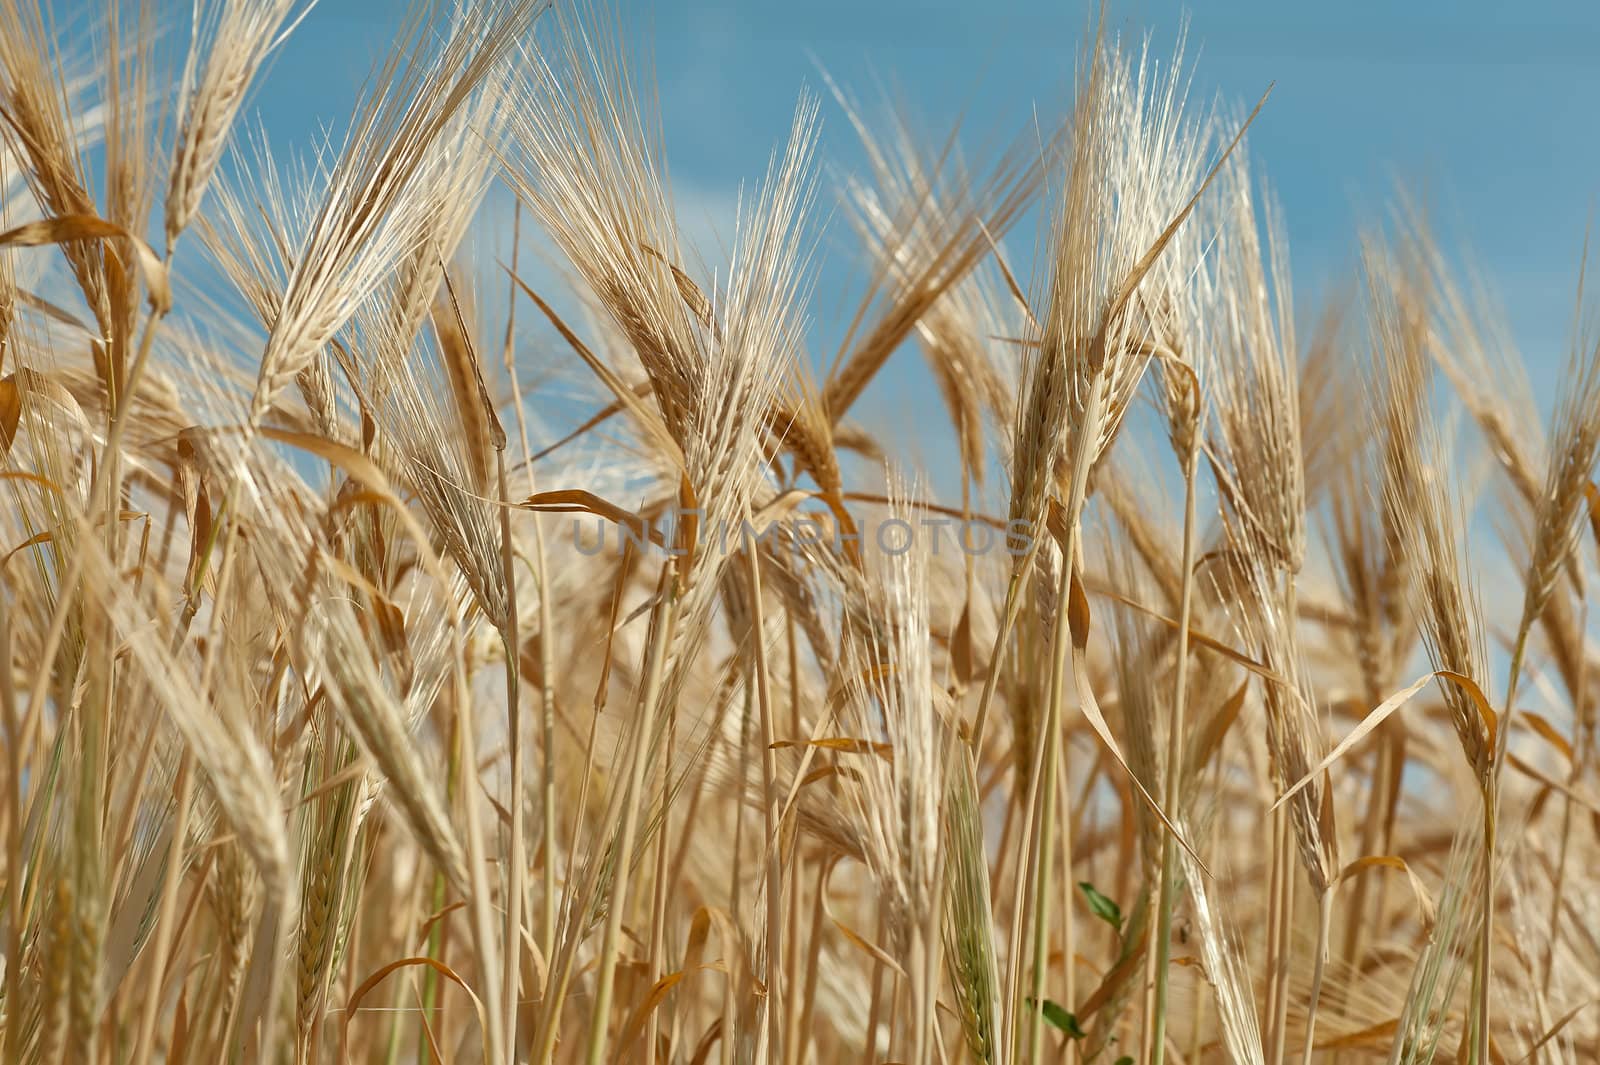 A wheat field against a blue sky.

